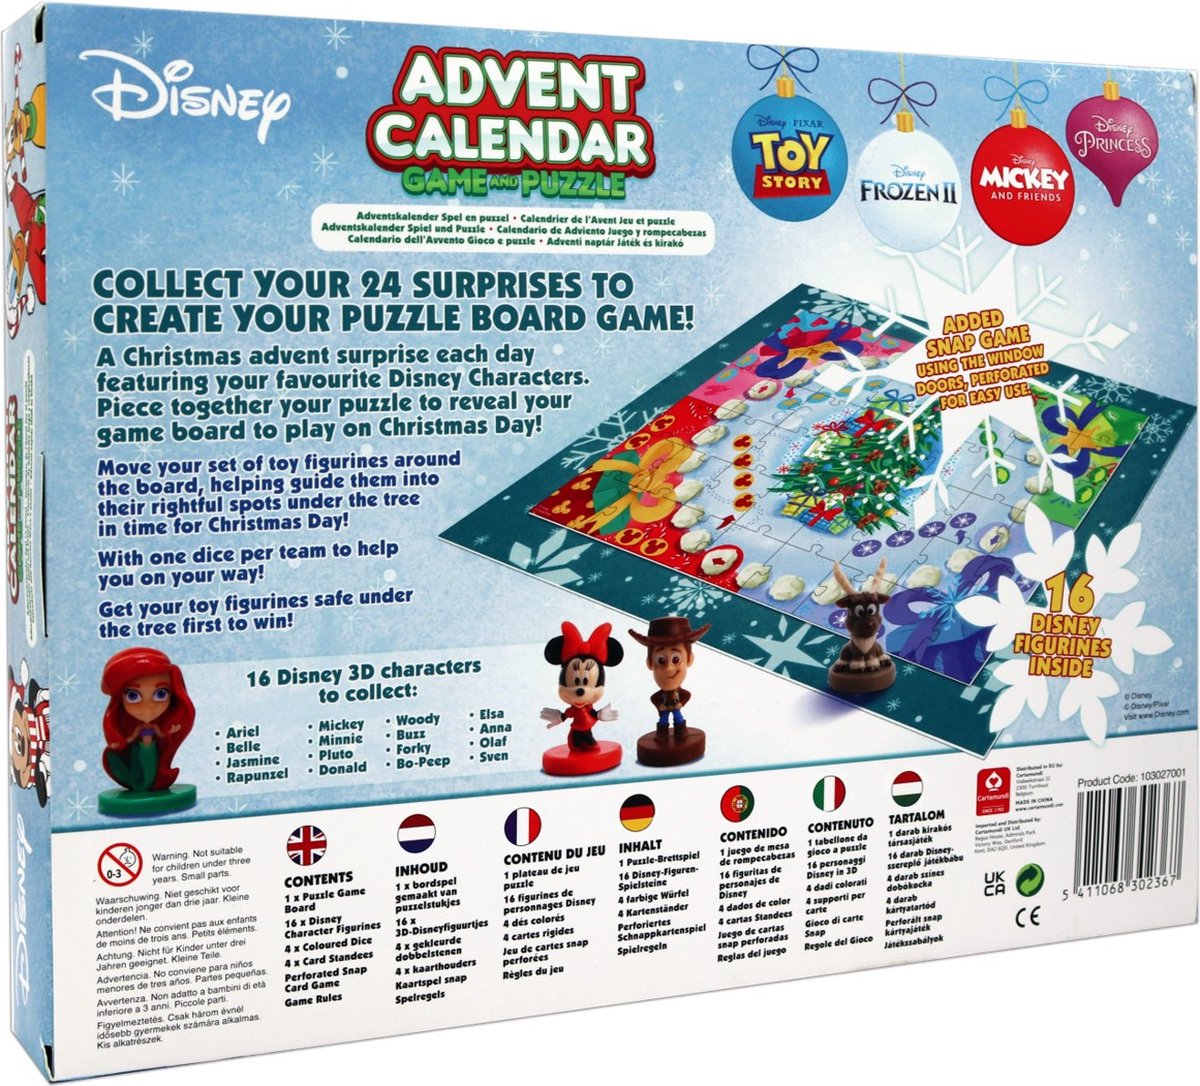 Disney Adventskalender - Spel & Puzzel - Bevat 24 verrassingen - Aftelkalender - Kerst